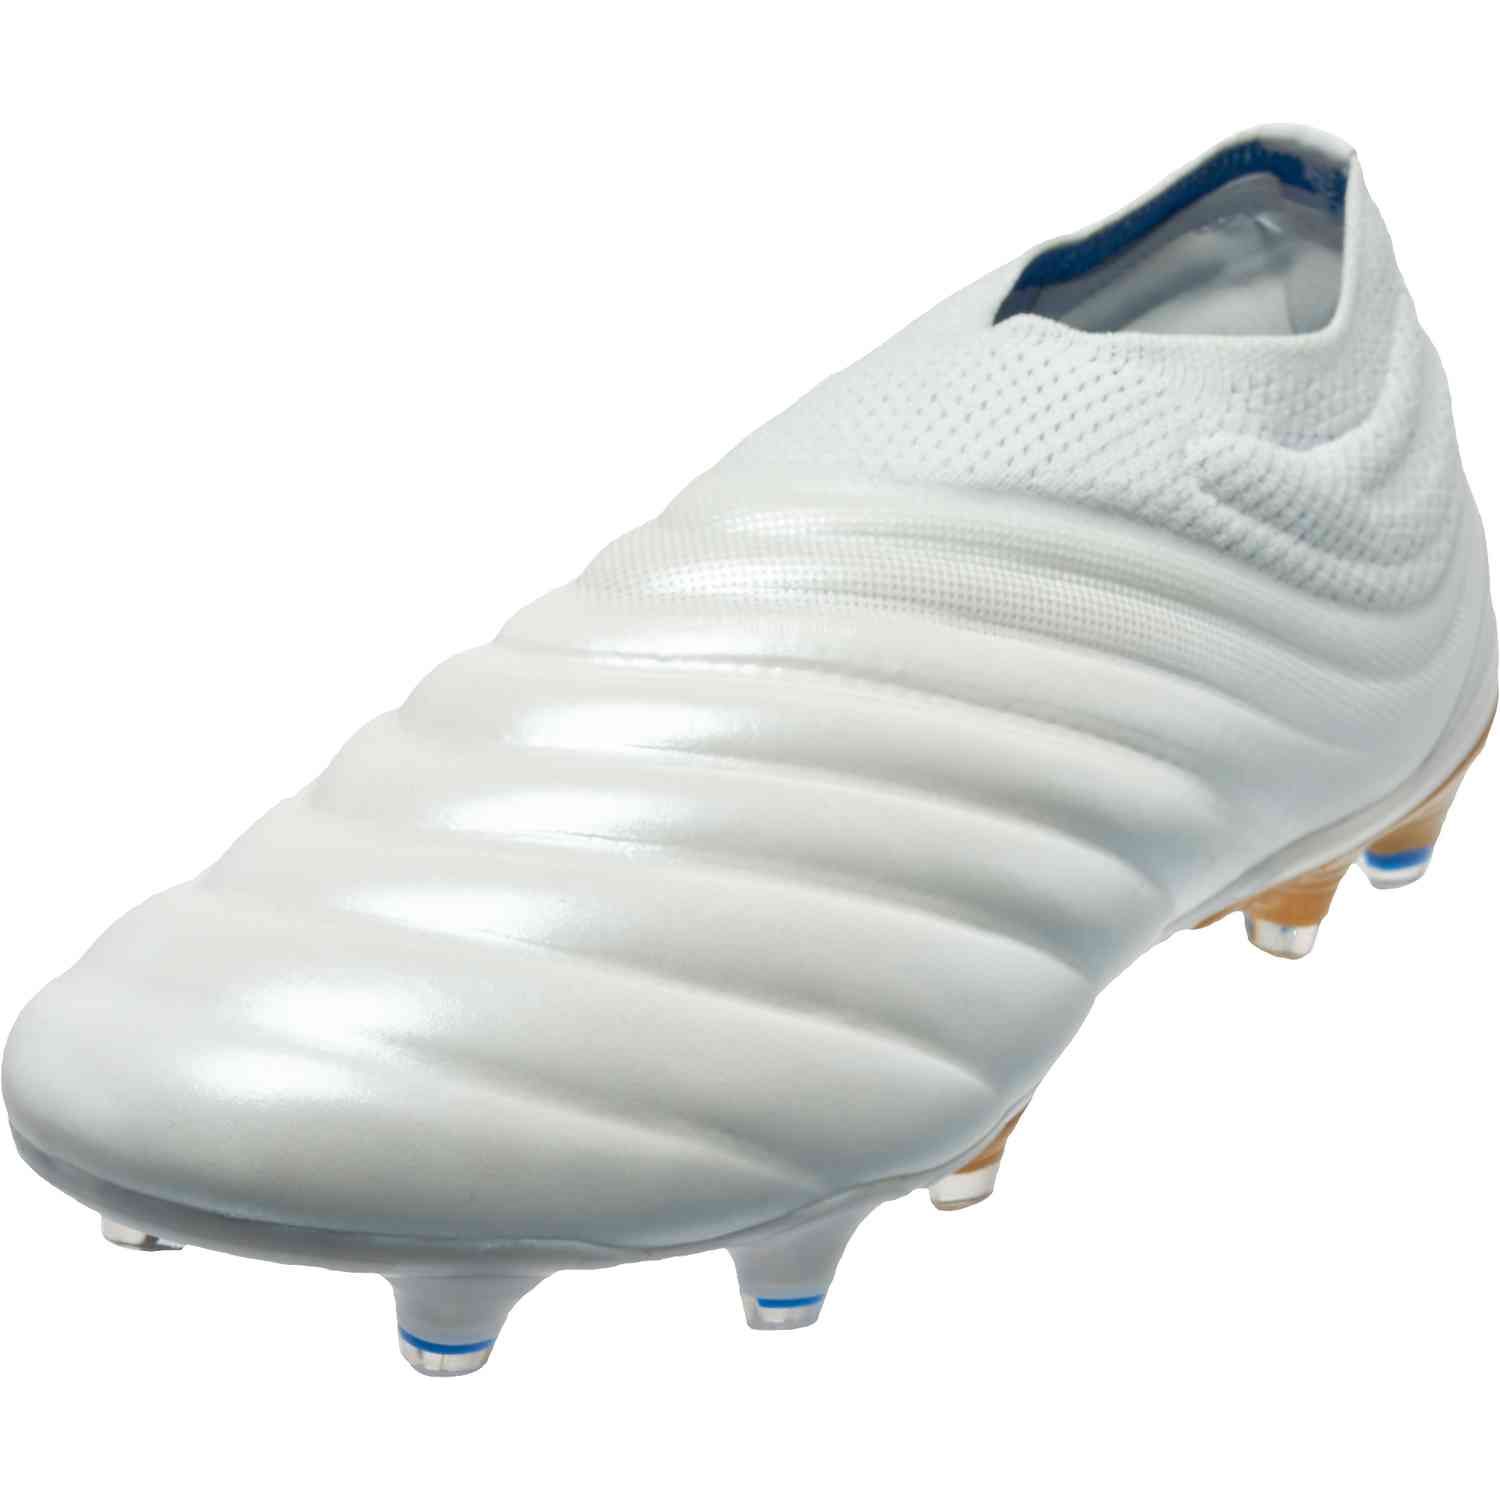 soccer shoes copa